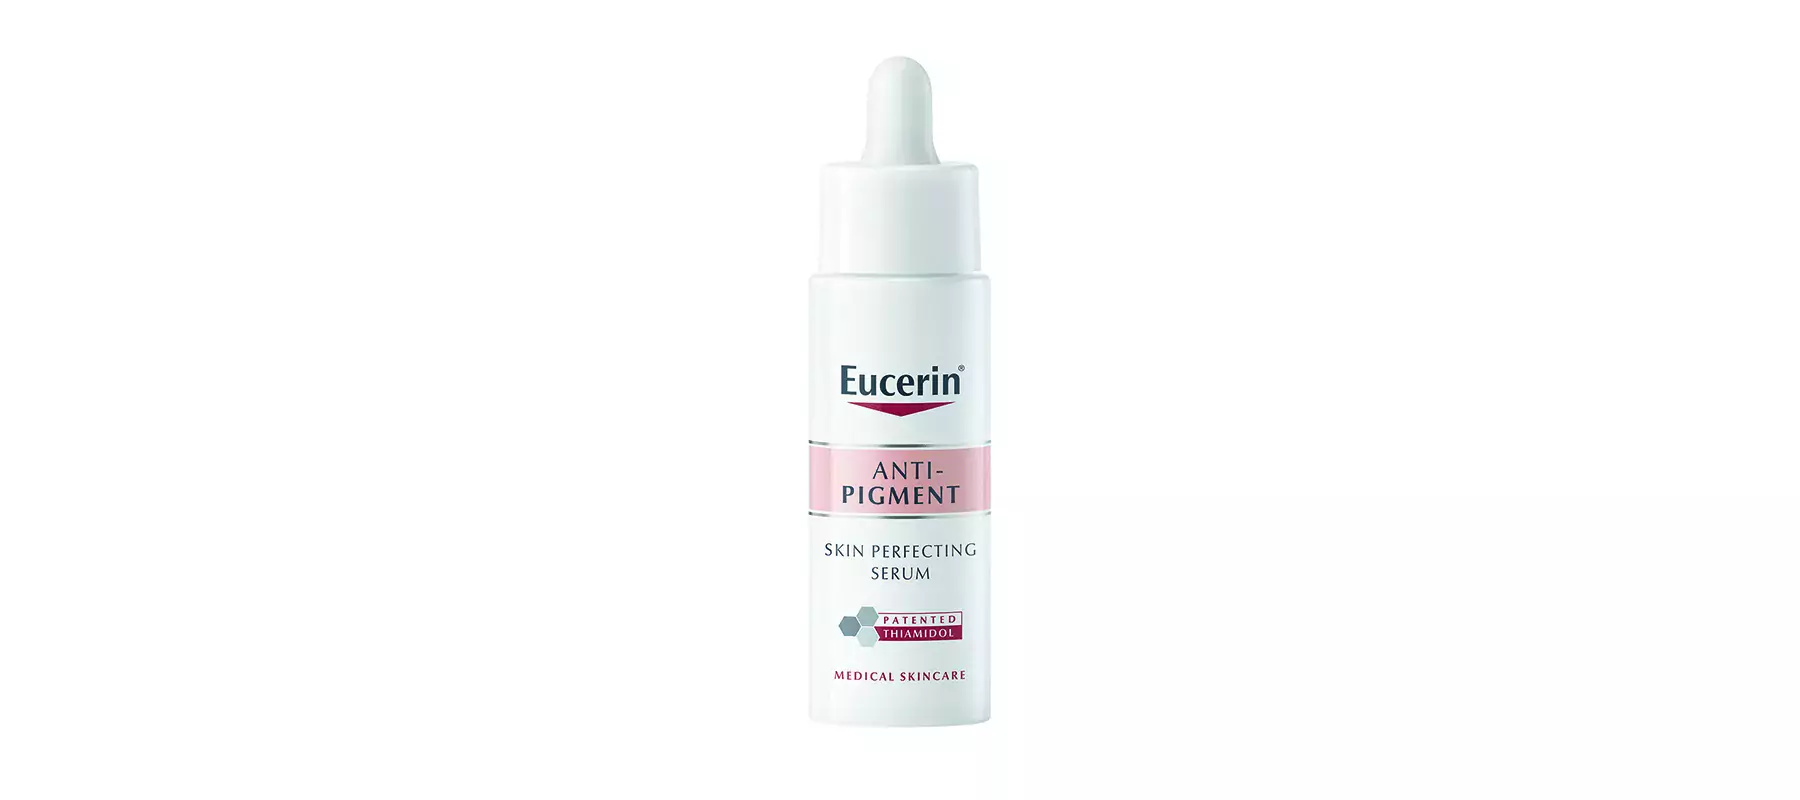 Eucerin®Anti-Pigment Skin Perfecting Serum